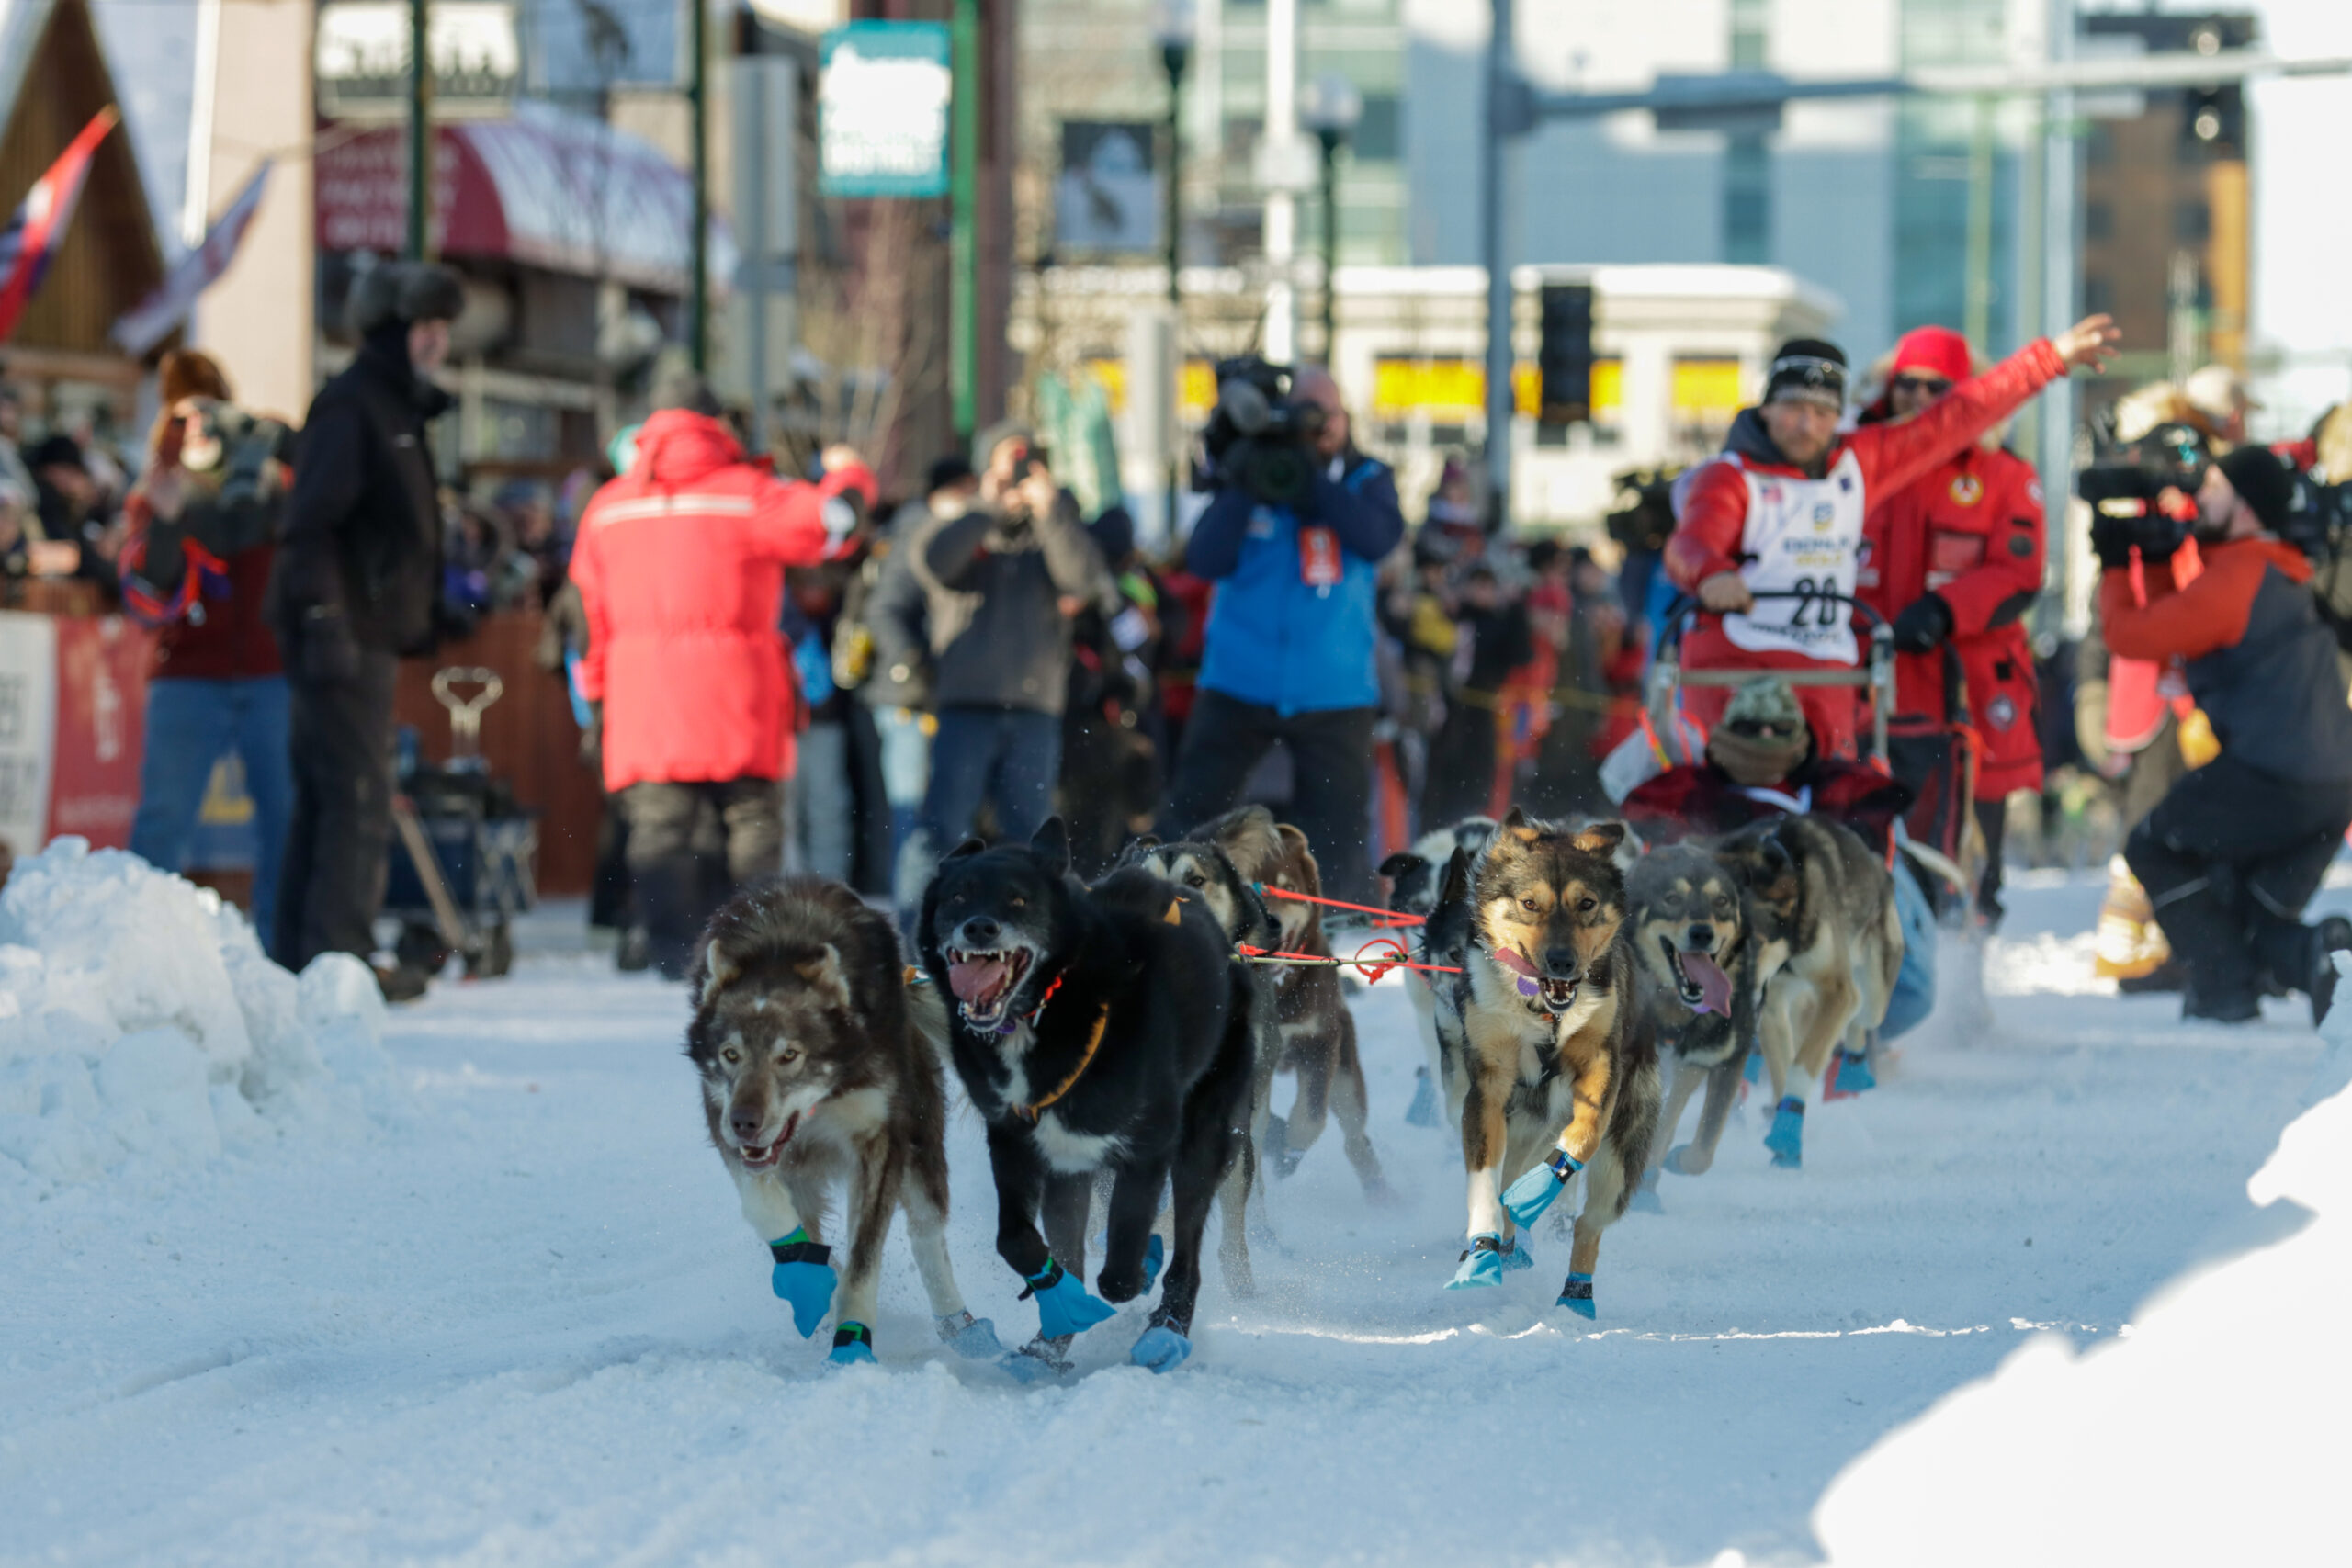 a dog team races down a crowded street